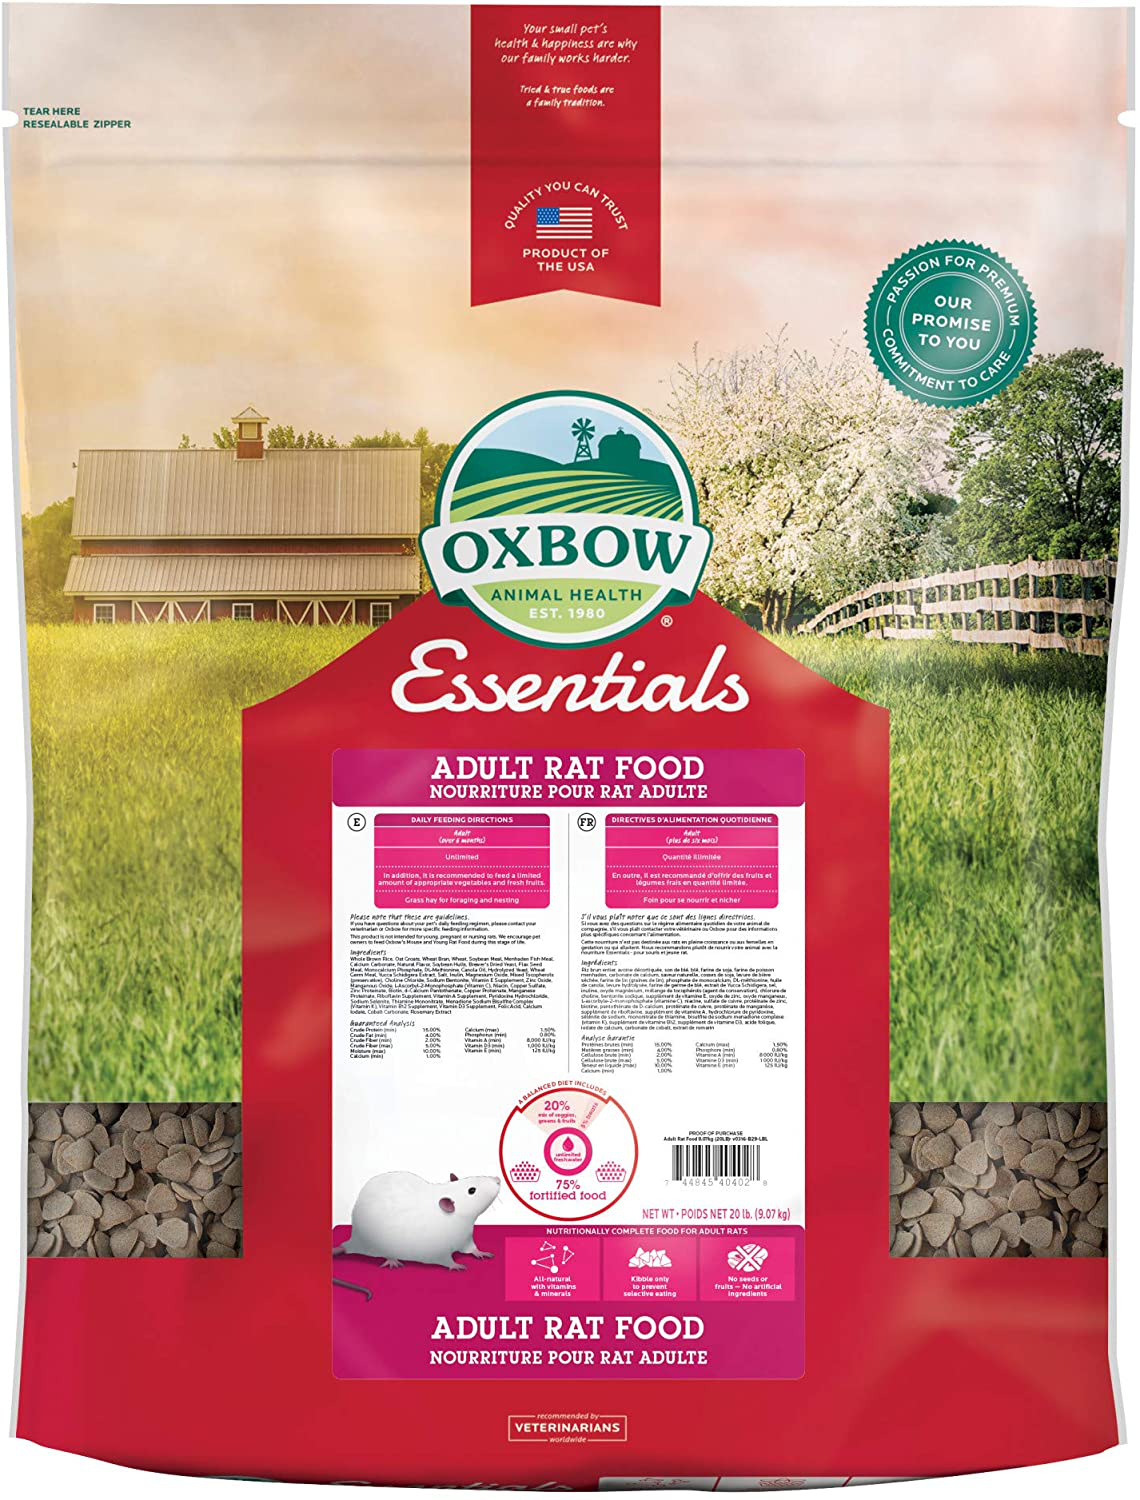 Oxbow Essentials Adult Rat Food - All Natural Adult Rat Food